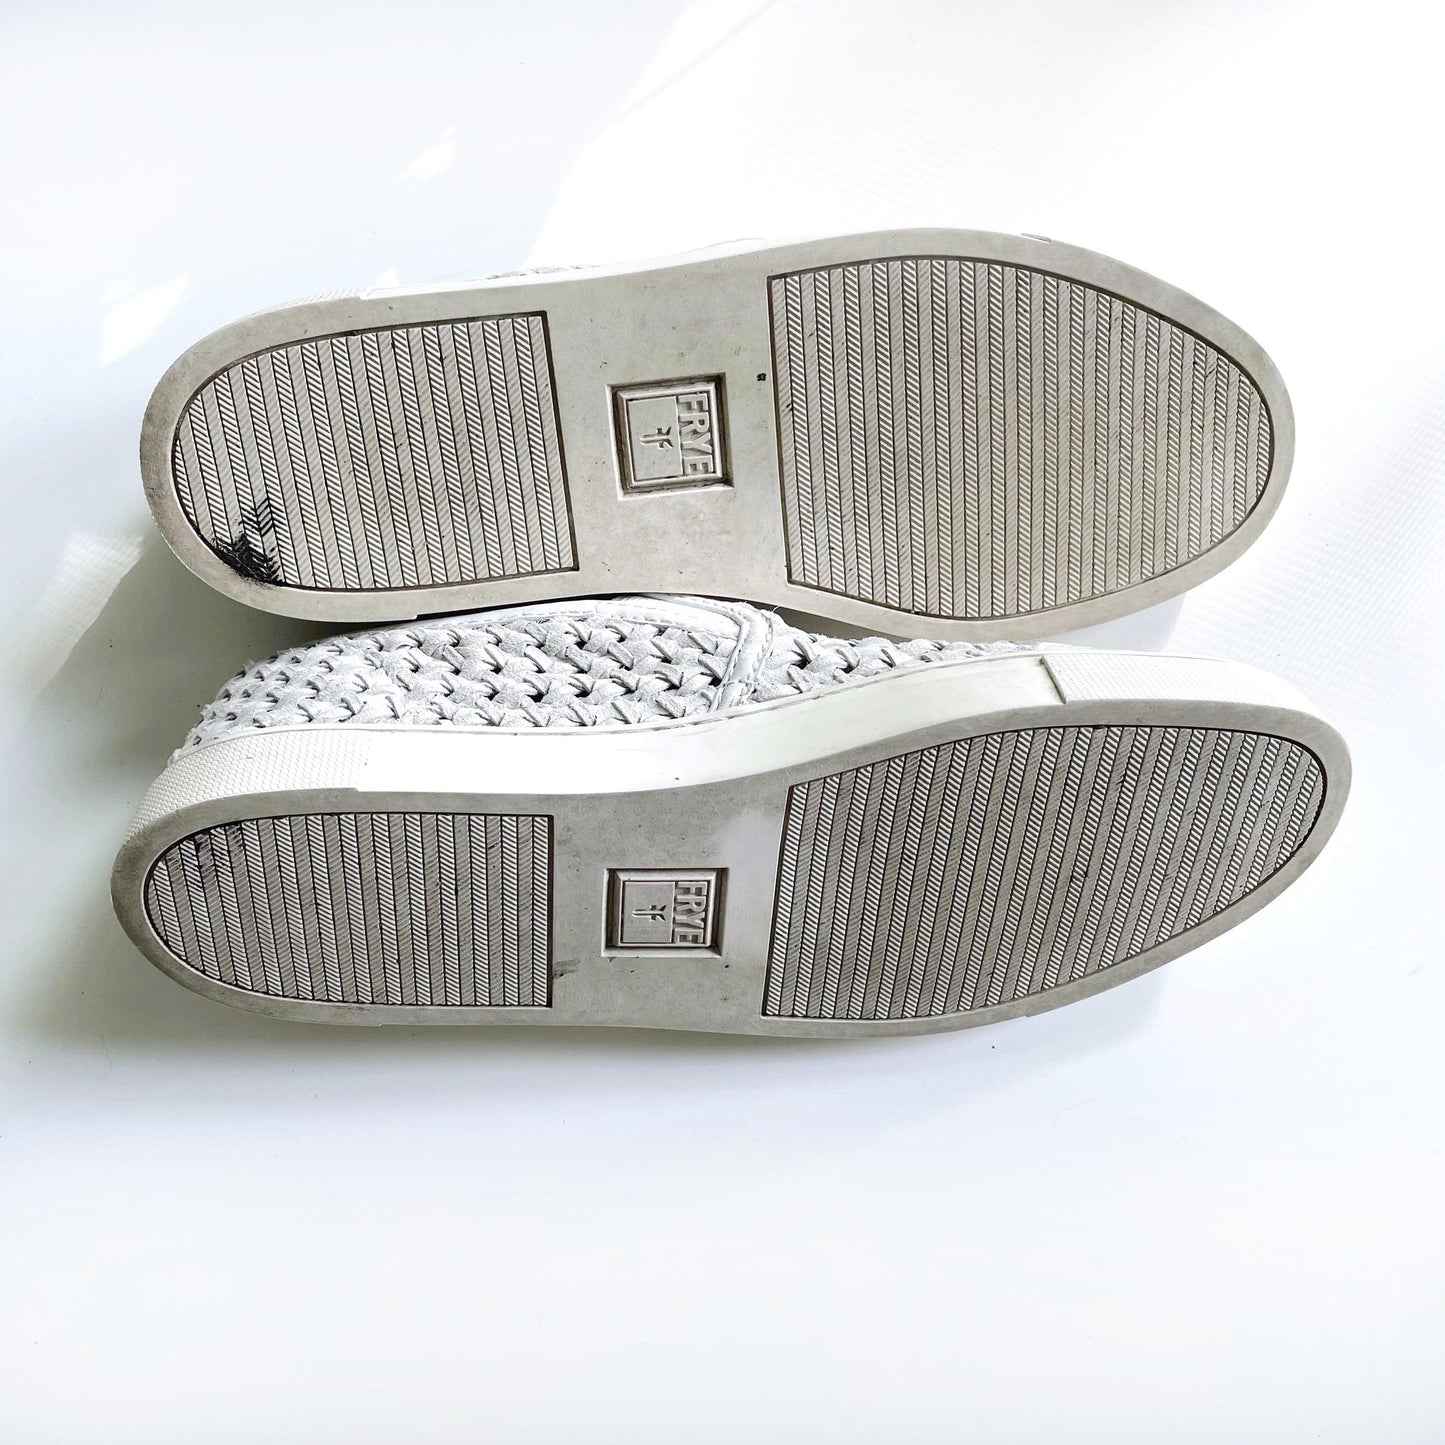 frye gemma white leather woven slip on shoe - size 8